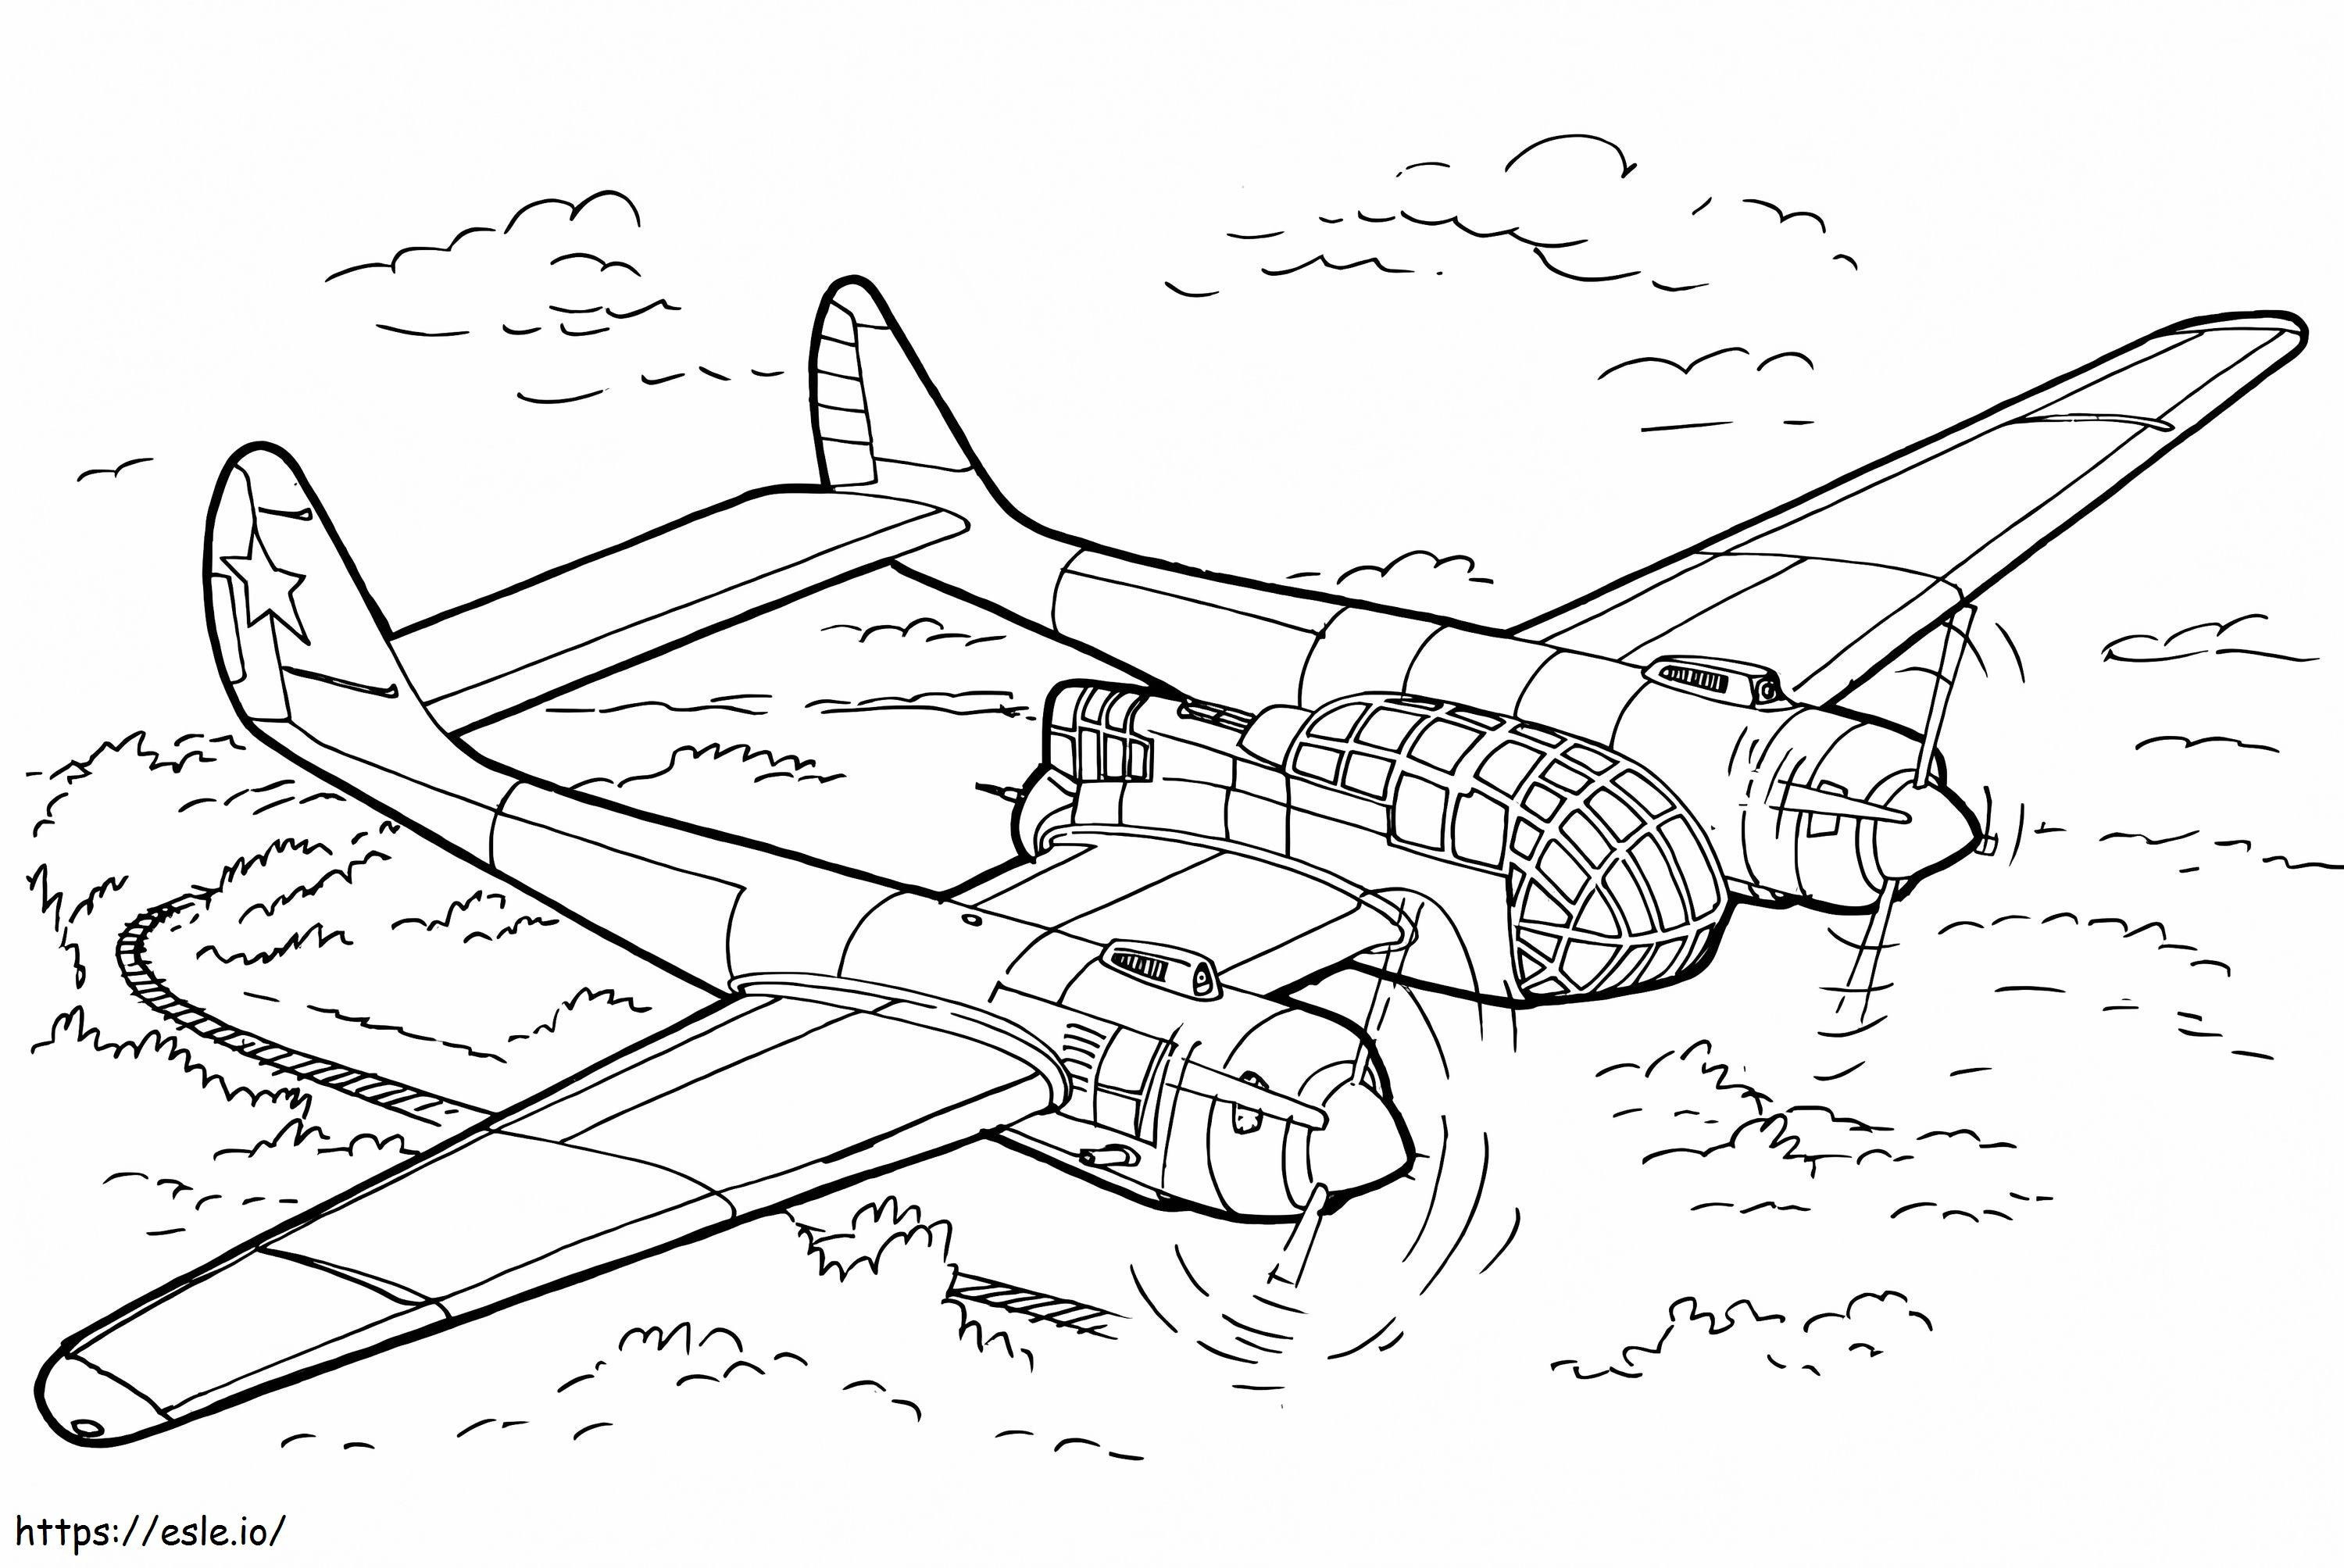 Reconnaissance Aircraft coloring page